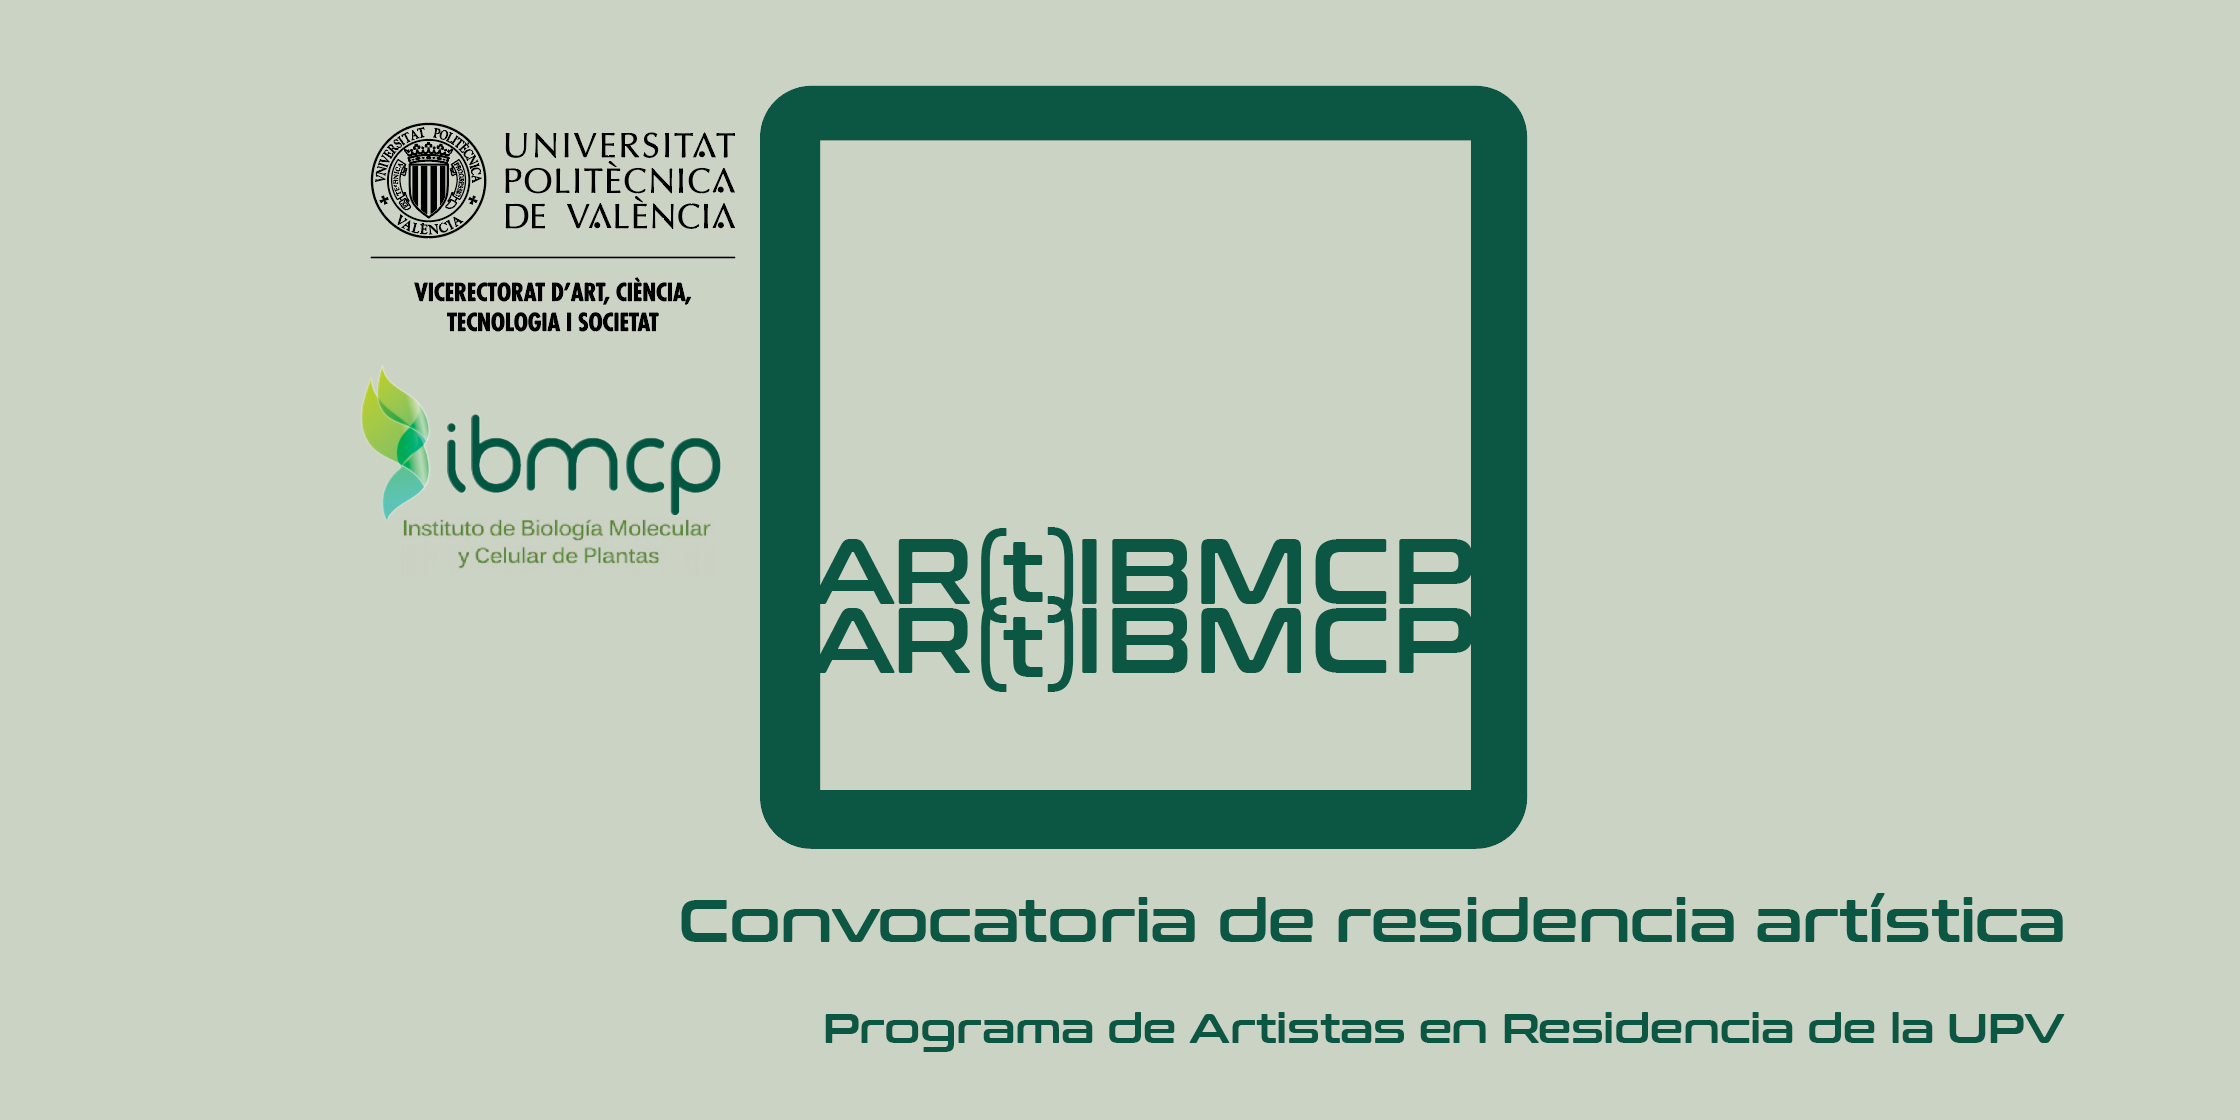 AR(t)IBMCP Artist-in-Residence